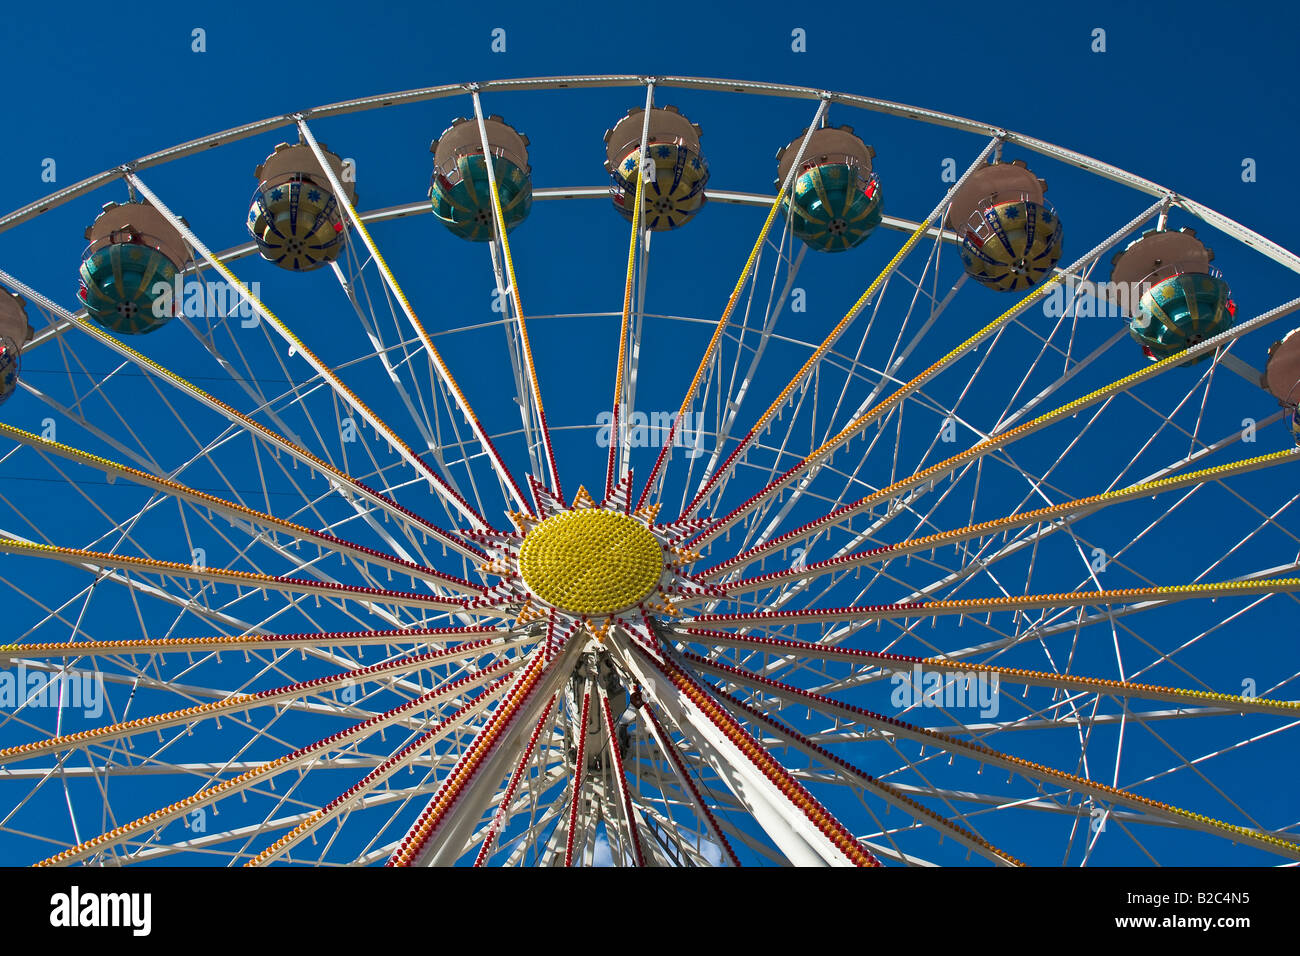 Giant ferris wheel at the celebration of the birthday of Hamburg Port, 2008, Hamburg, Germany, Europe Stock Photo